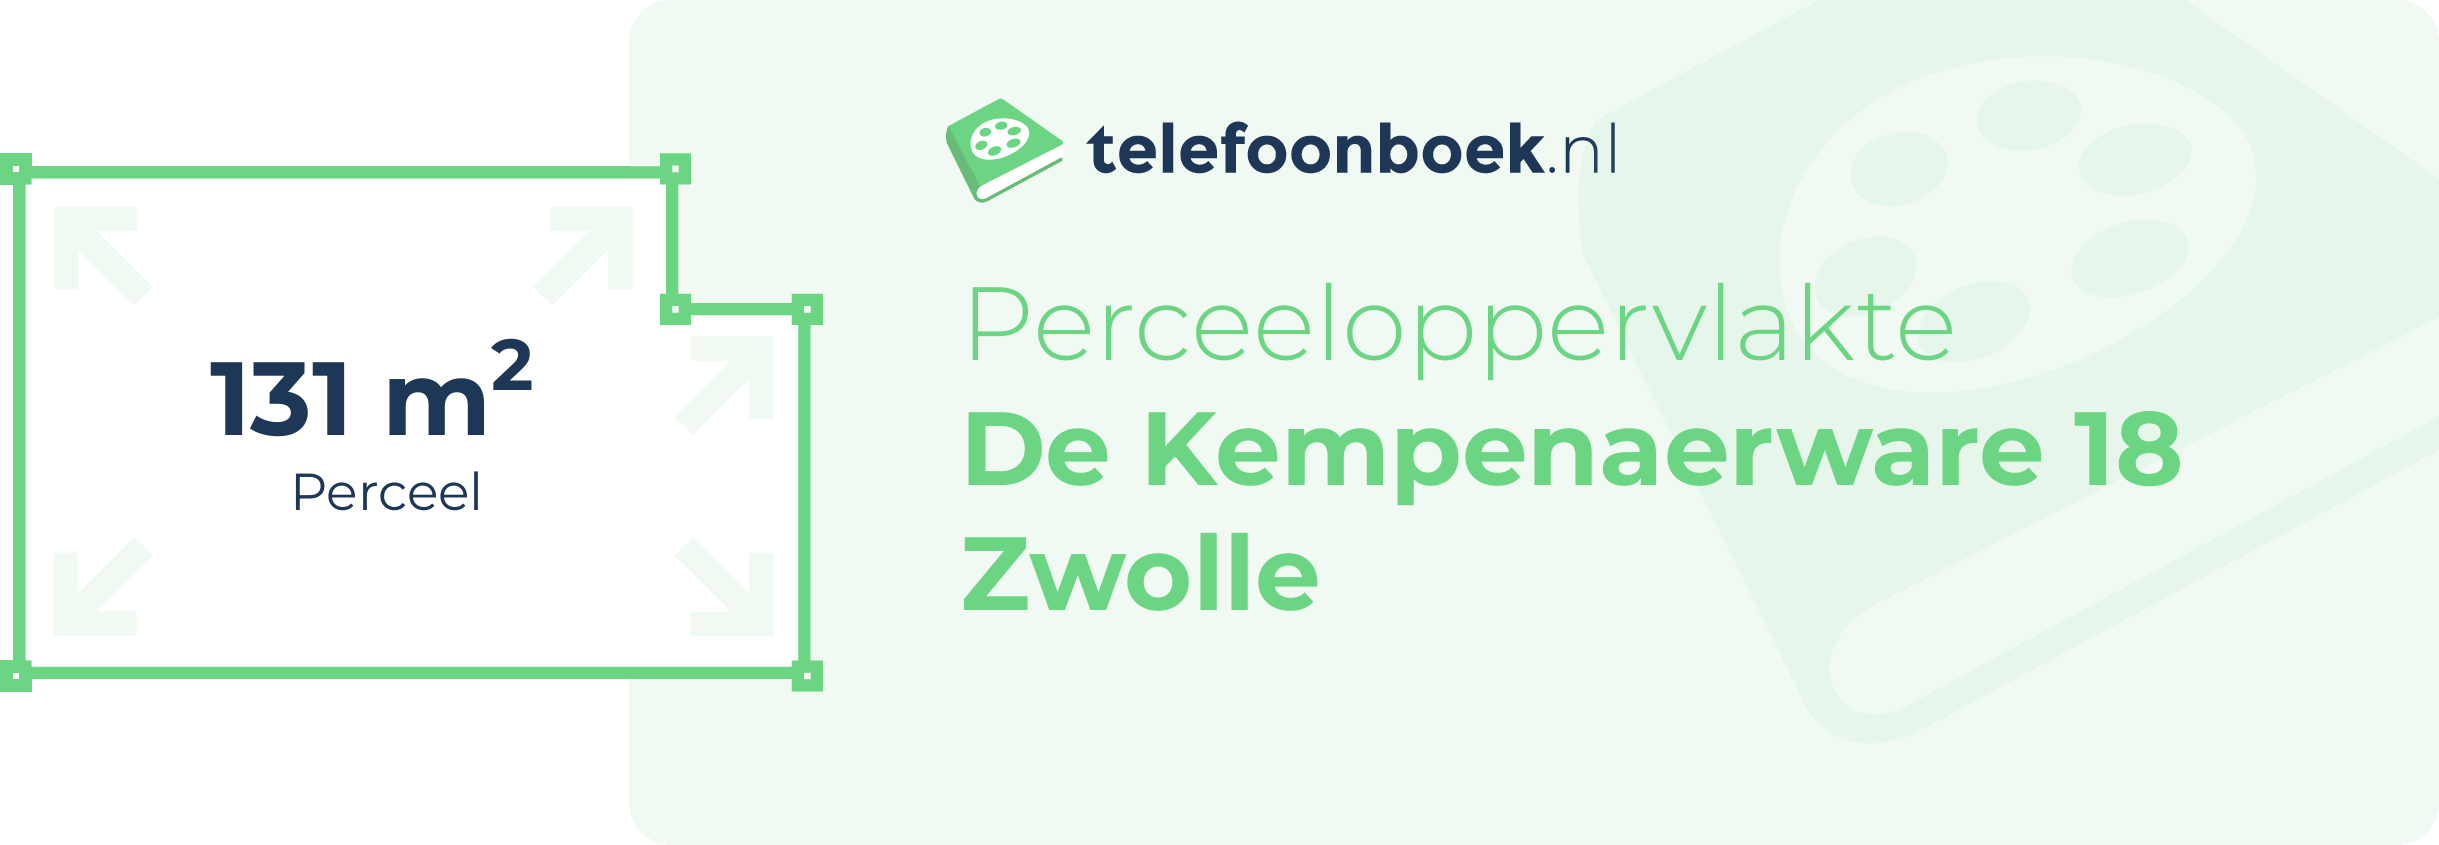 Perceeloppervlakte De Kempenaerware 18 Zwolle